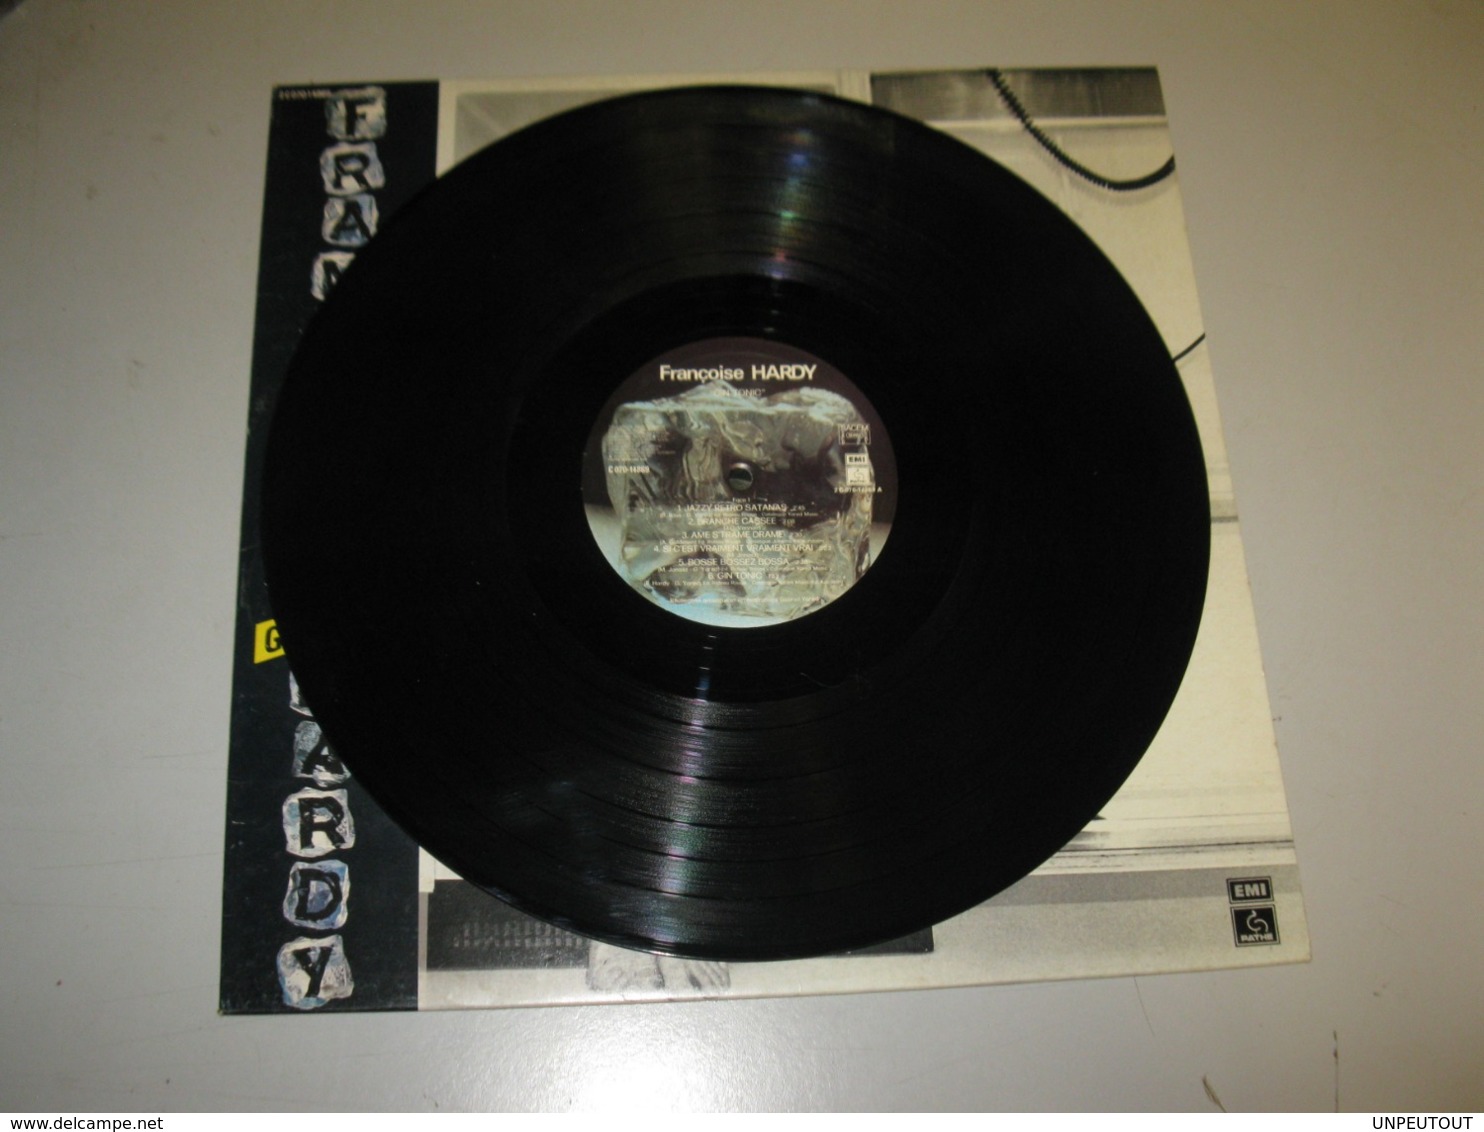 VINYLE FRANCOISE HARDY "GIN TONIC" 33 T PATHE / EMI (1980) - Other - French Music